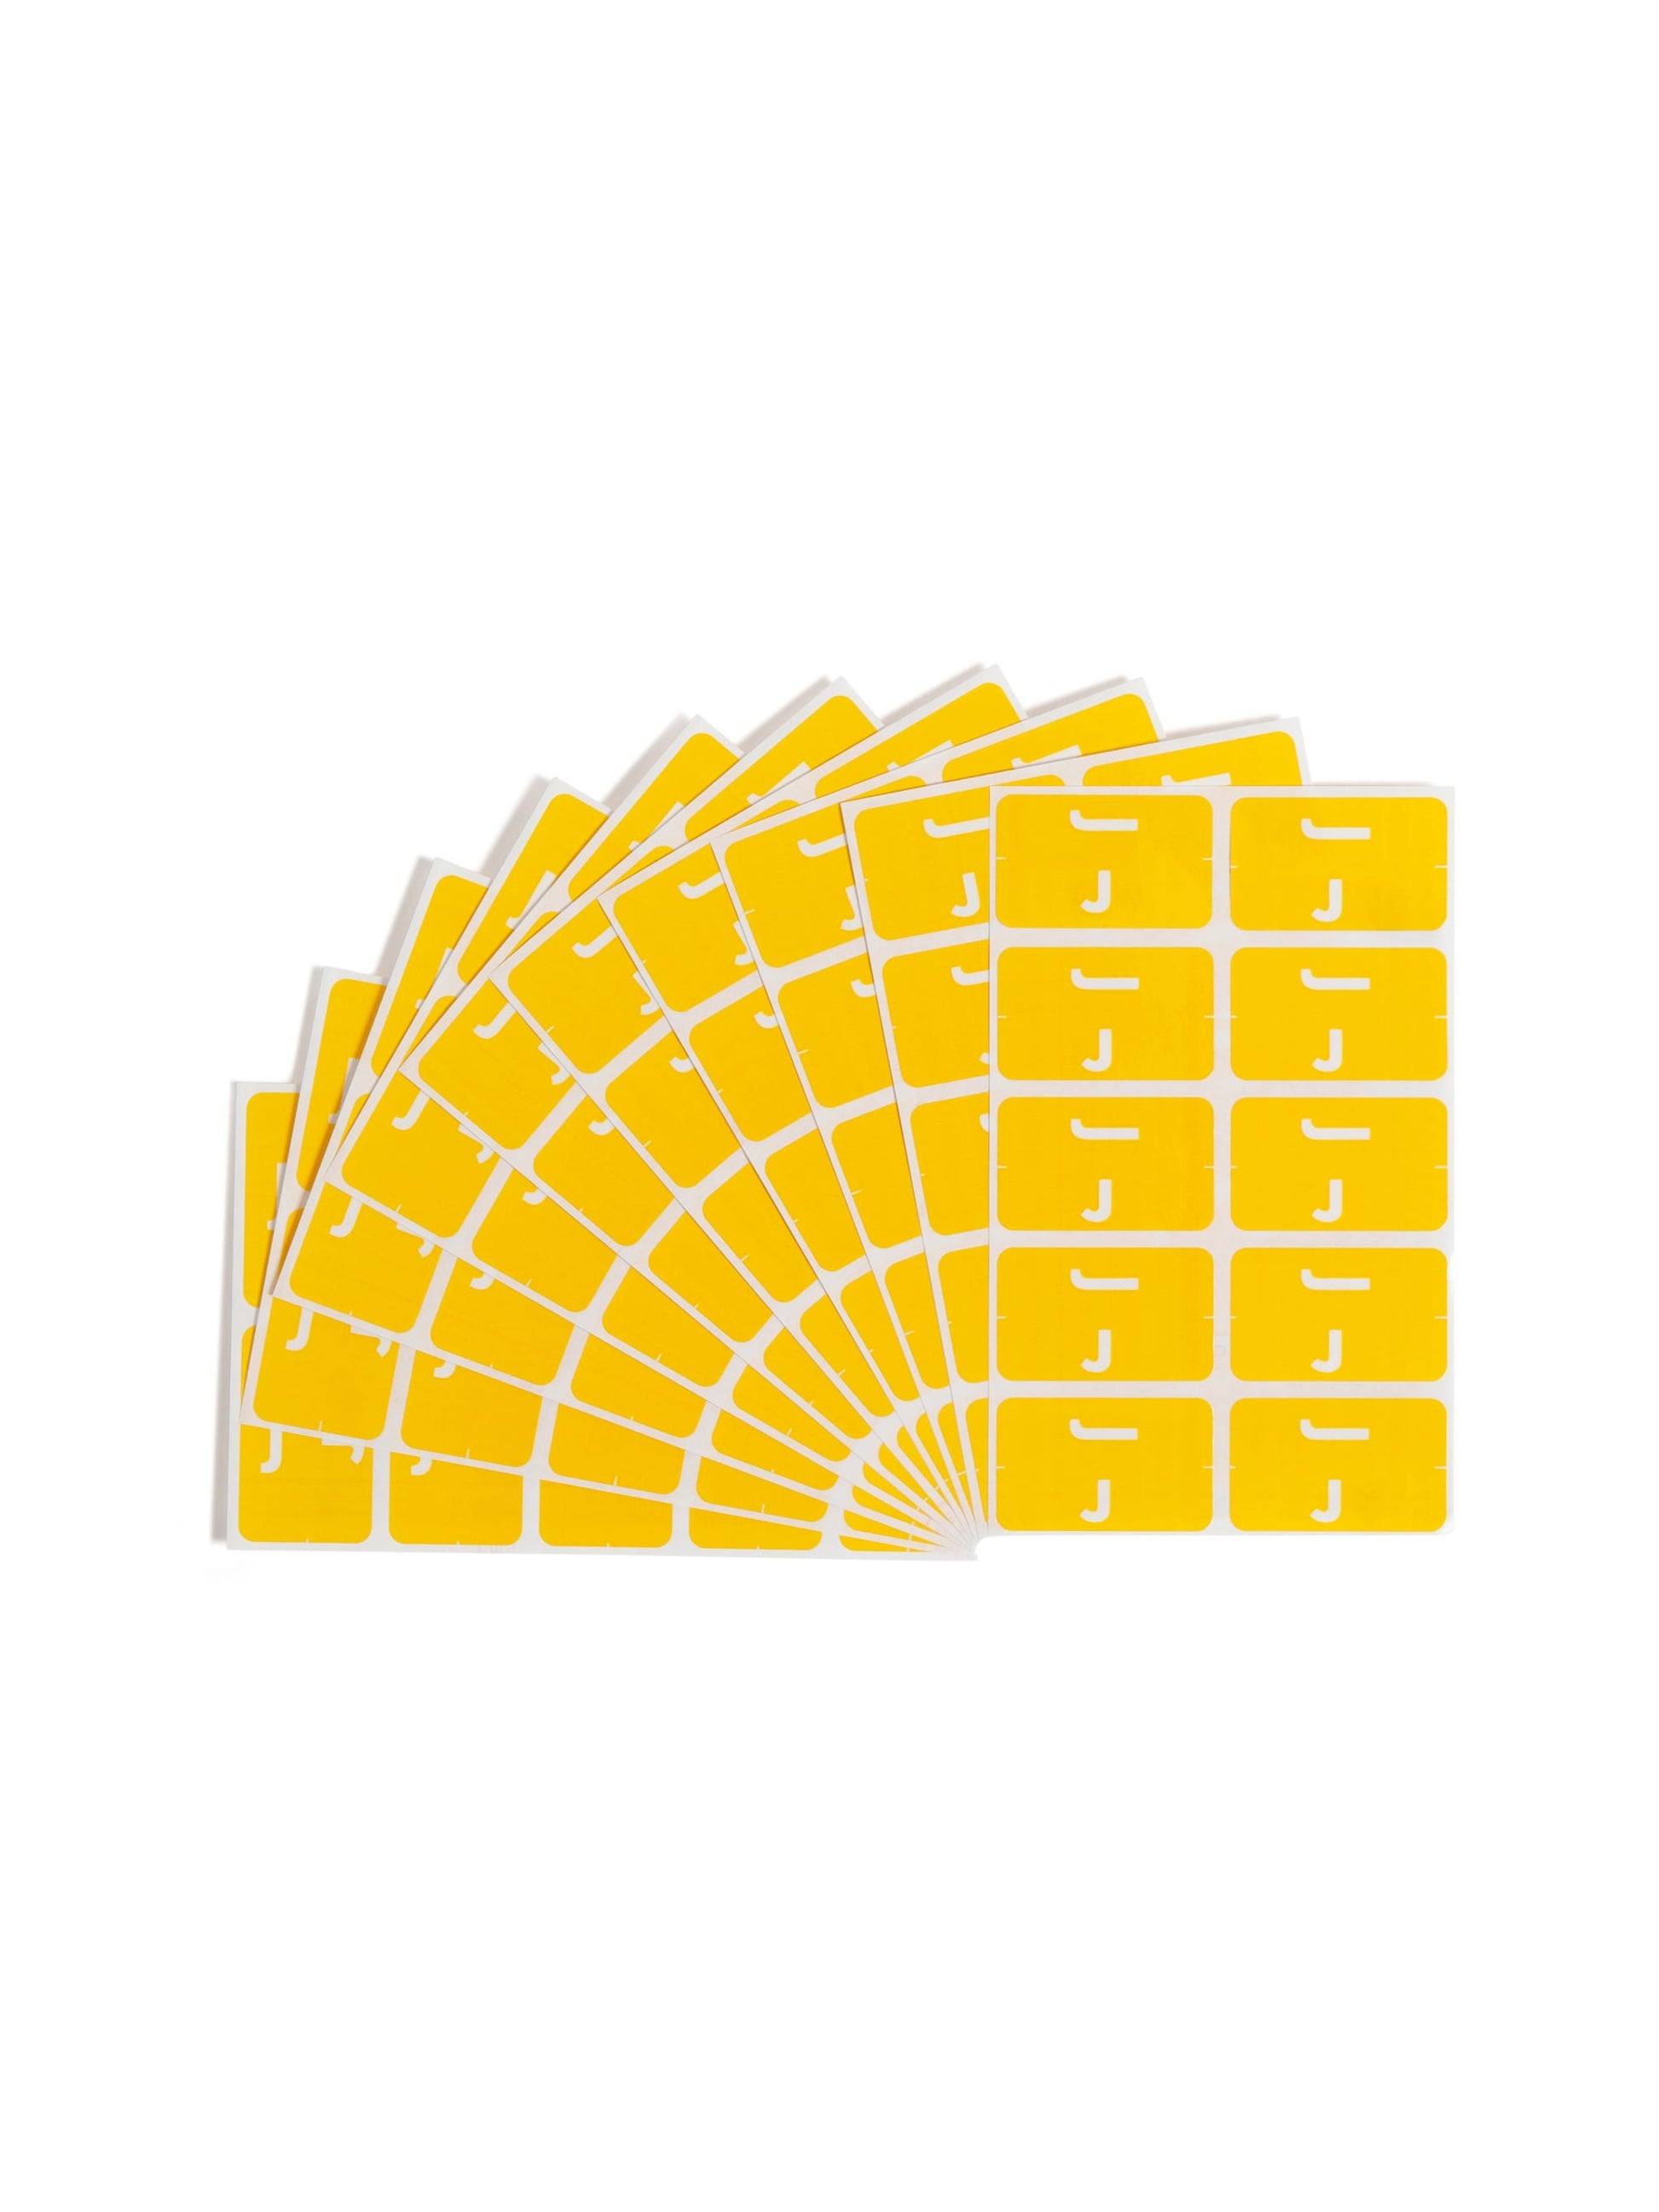 AlphaZ® ACCS Color Coded Alphabetic Labels - Sheets, Yellow Color, 1" X 1-5/8" Size, Set of 1, 086486671804